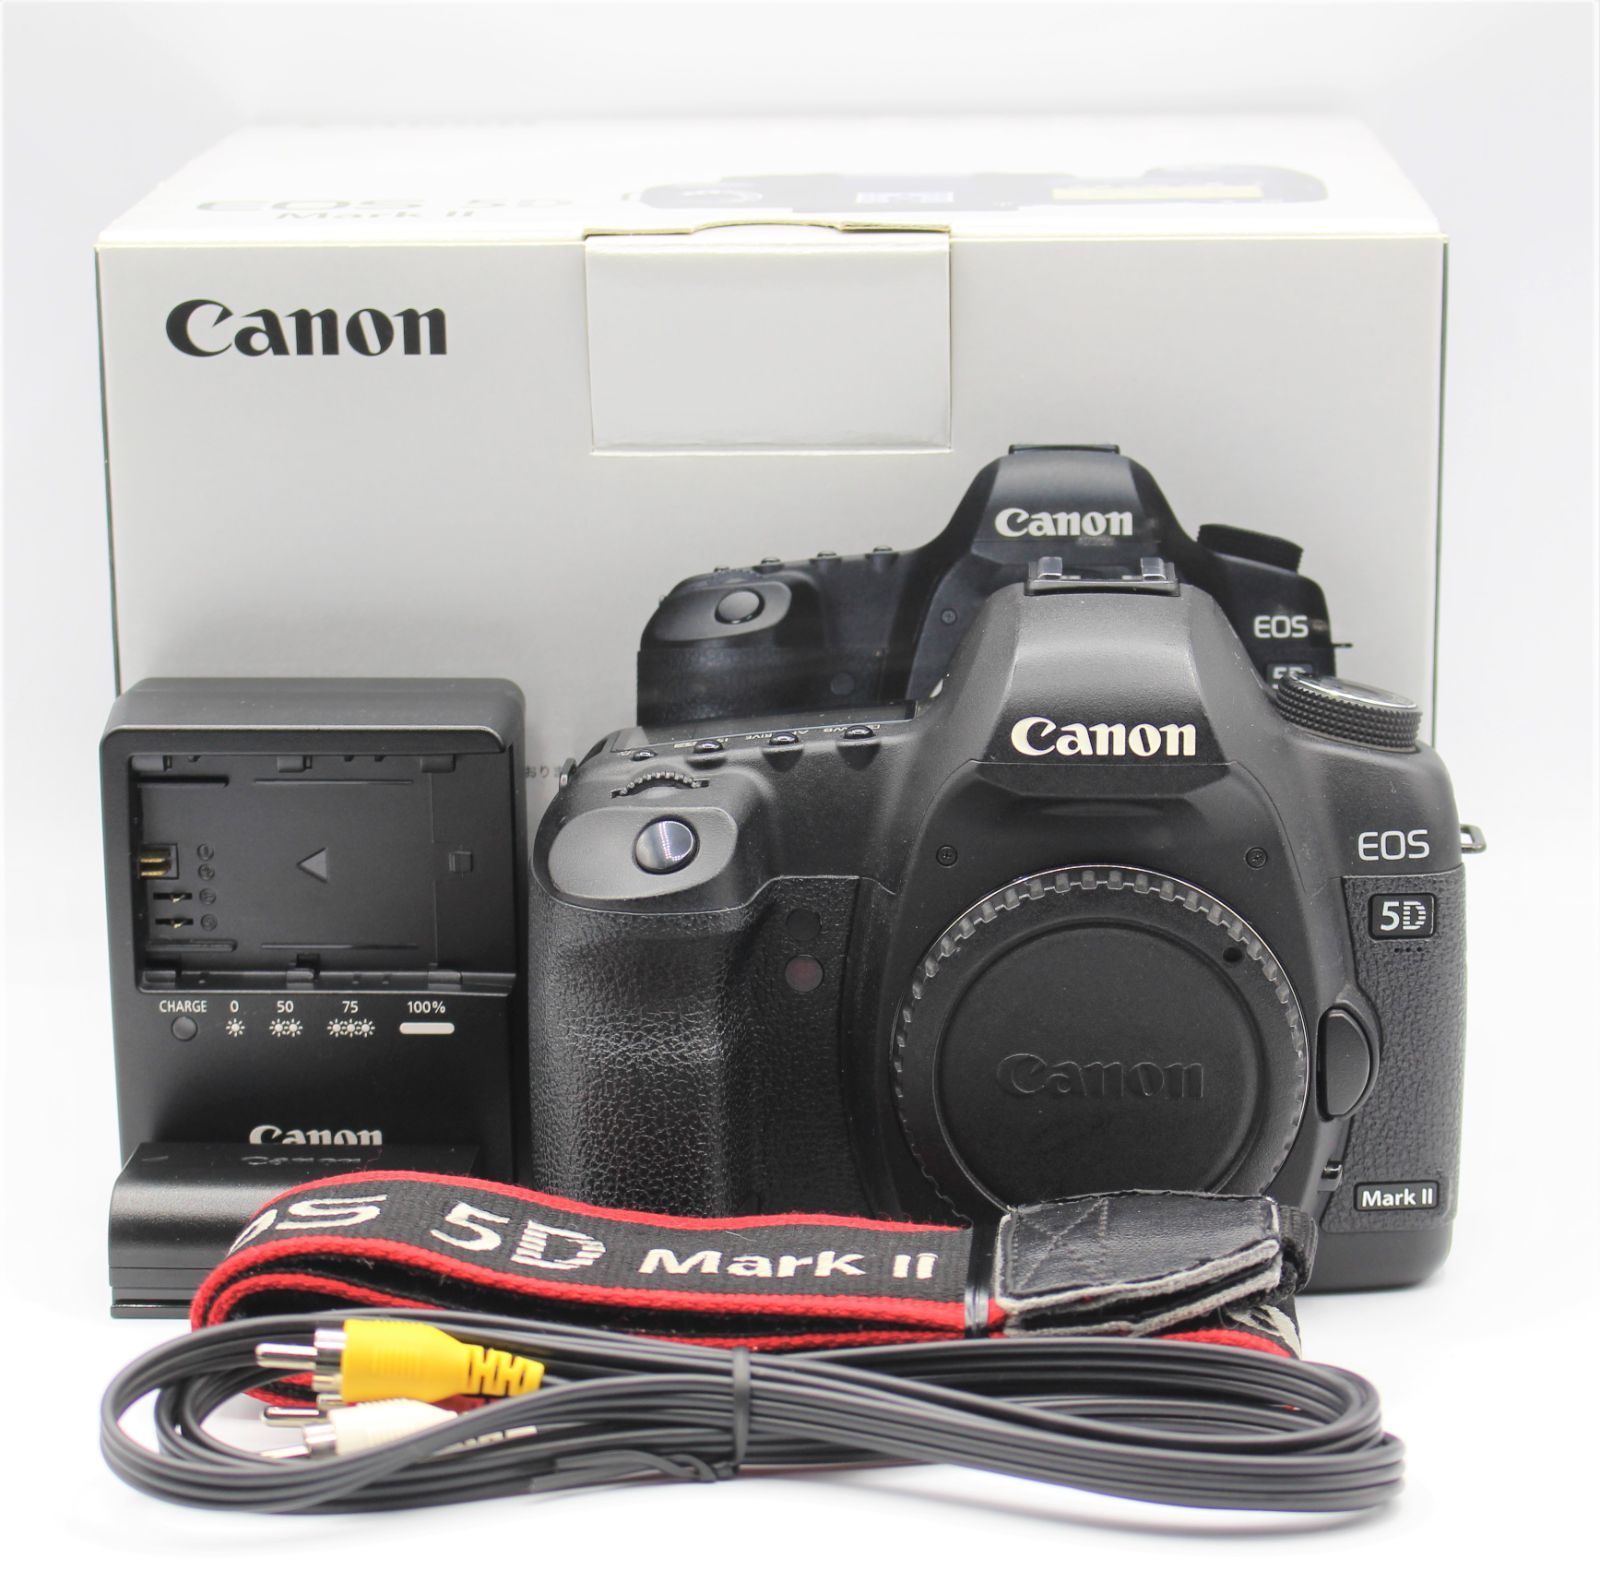 Canon デジタル一眼レフカメラ EOS 5D MarkII ボディ www.musicaiem.com.br